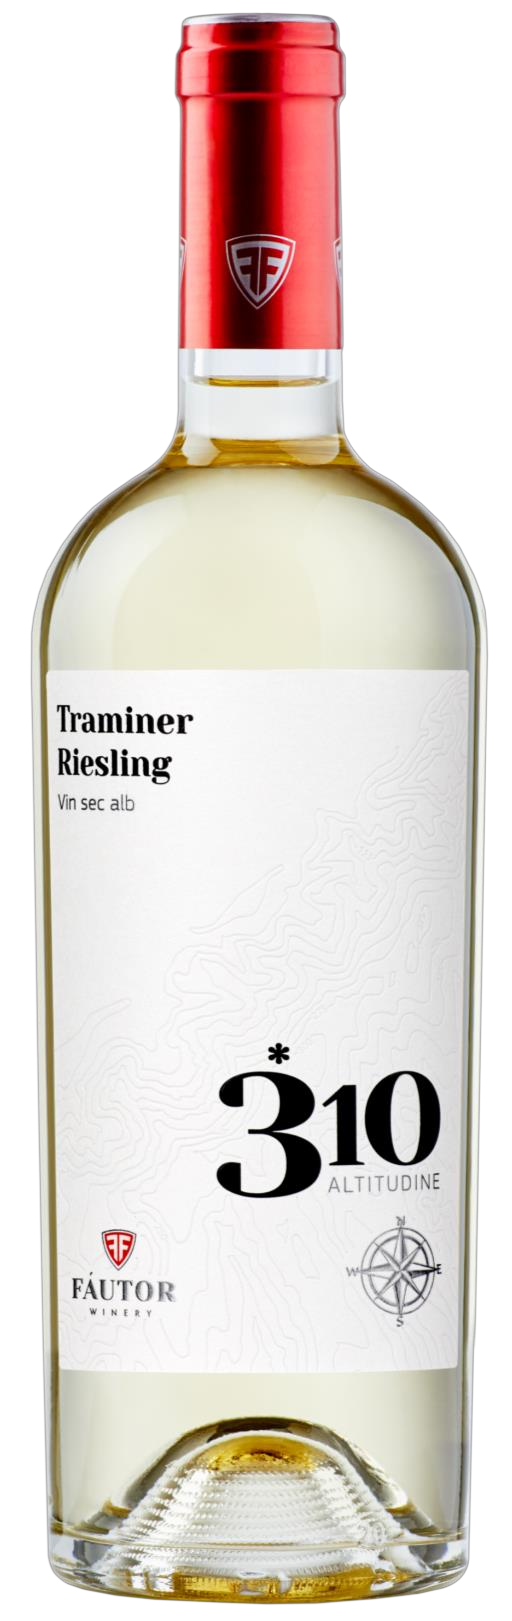 Fautor 310 ALTITUDINE Traminer-Riesling, White dry wine 0.75l foto trumbs 1